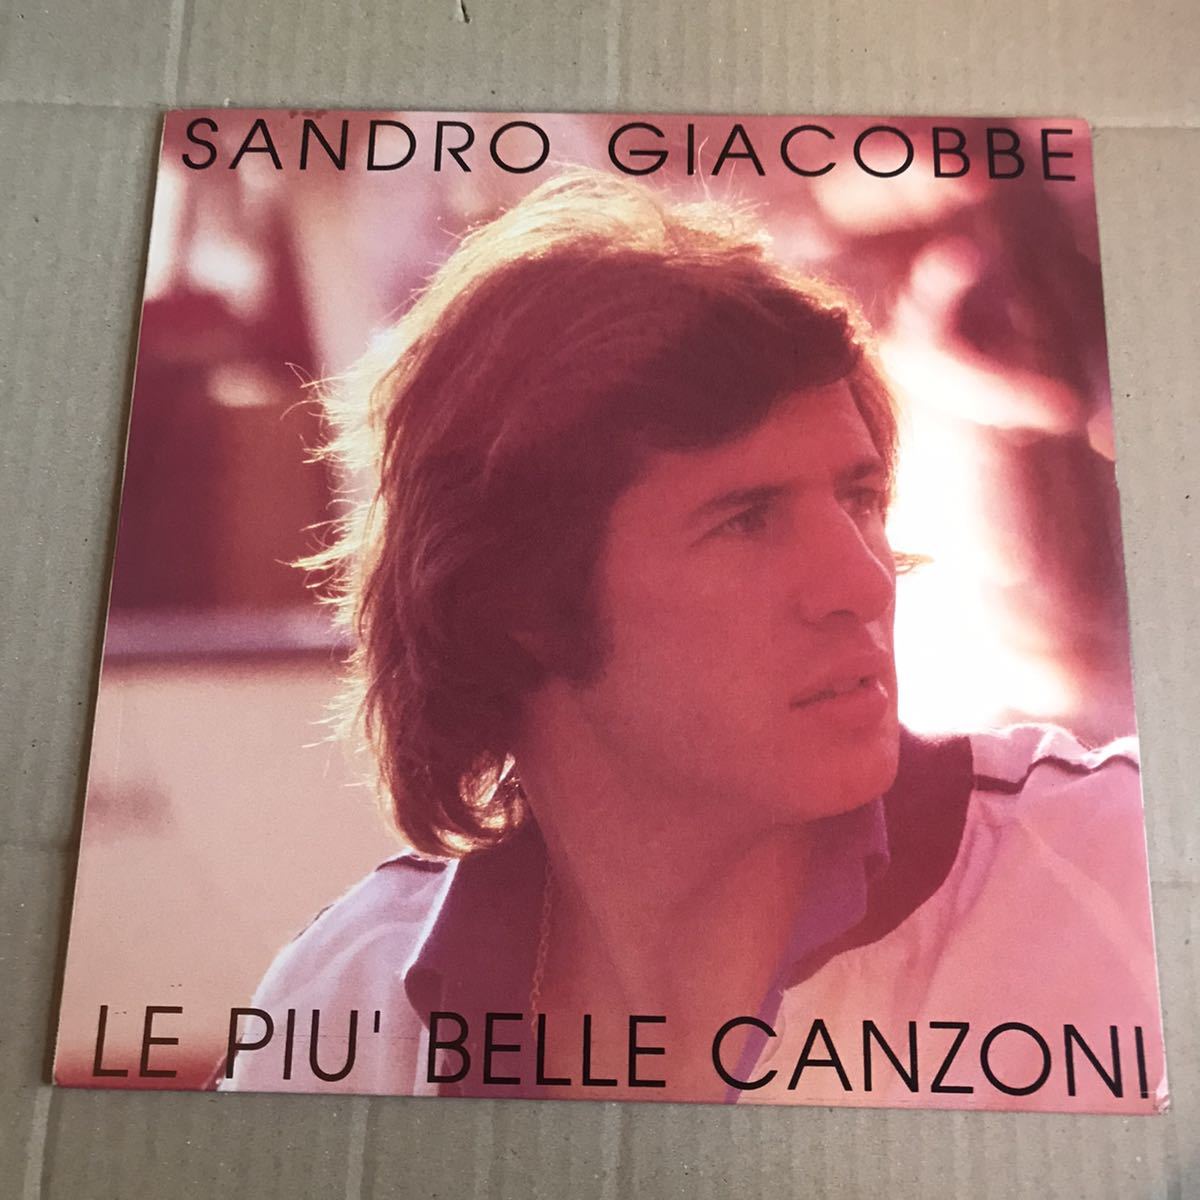 Sandro Giacobbe LP Le Pi Belle Canzoni Di サンドロ・ジャコッベ サンレモ カンツオーネ イタリアン ポップ イタリア盤_画像1